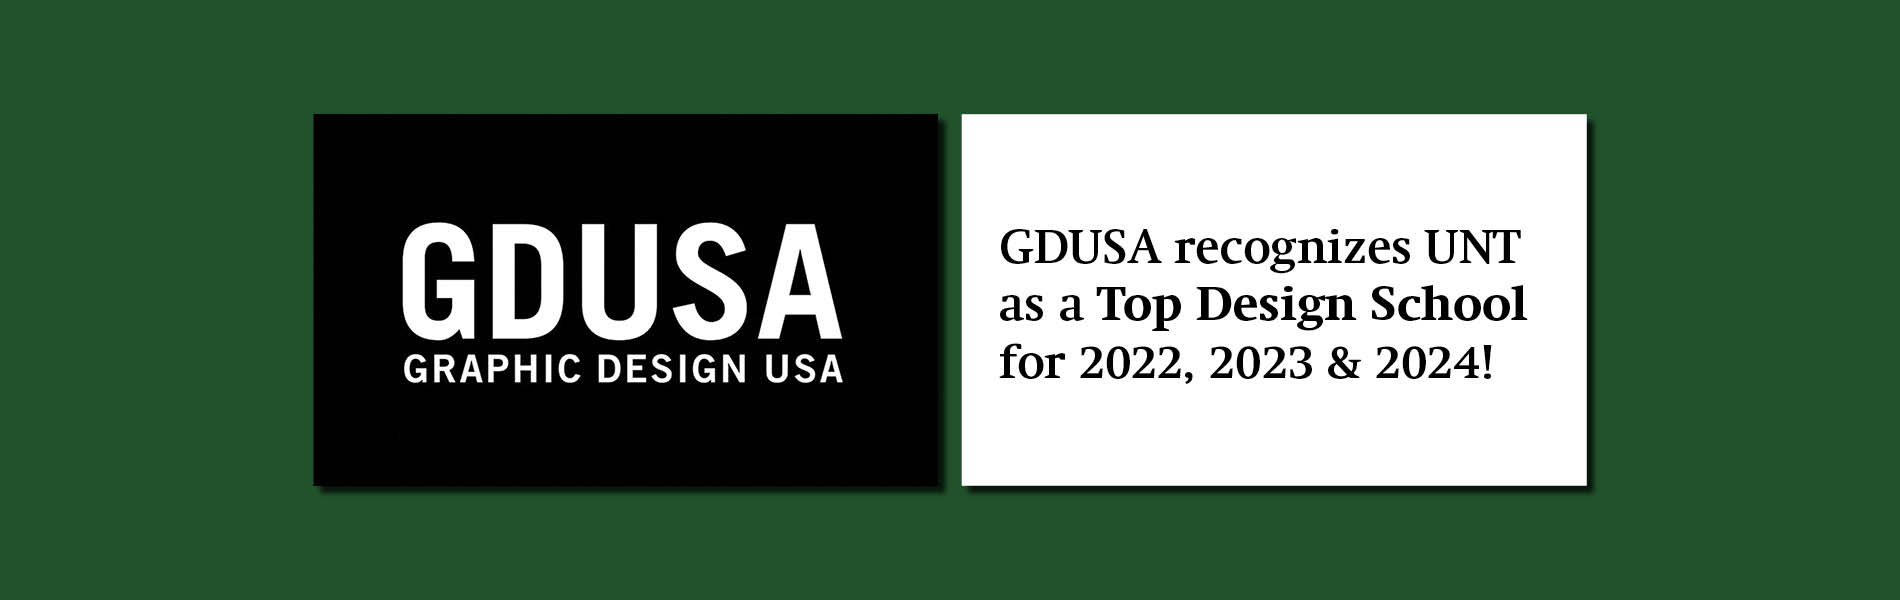 GDUSA recognizes UNT as a Top Design School